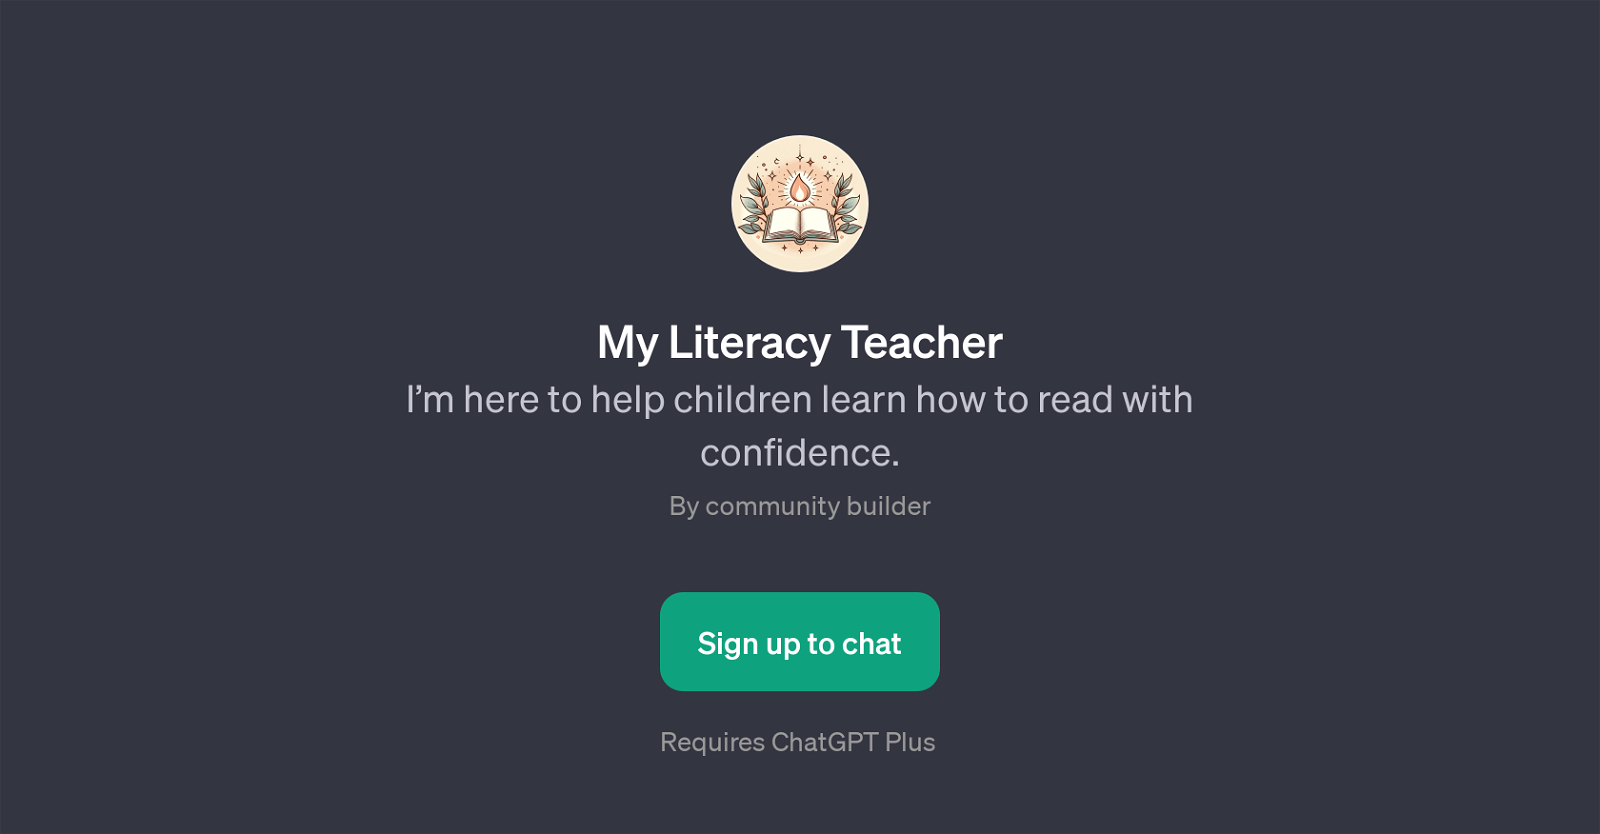 My Literacy Teacher website